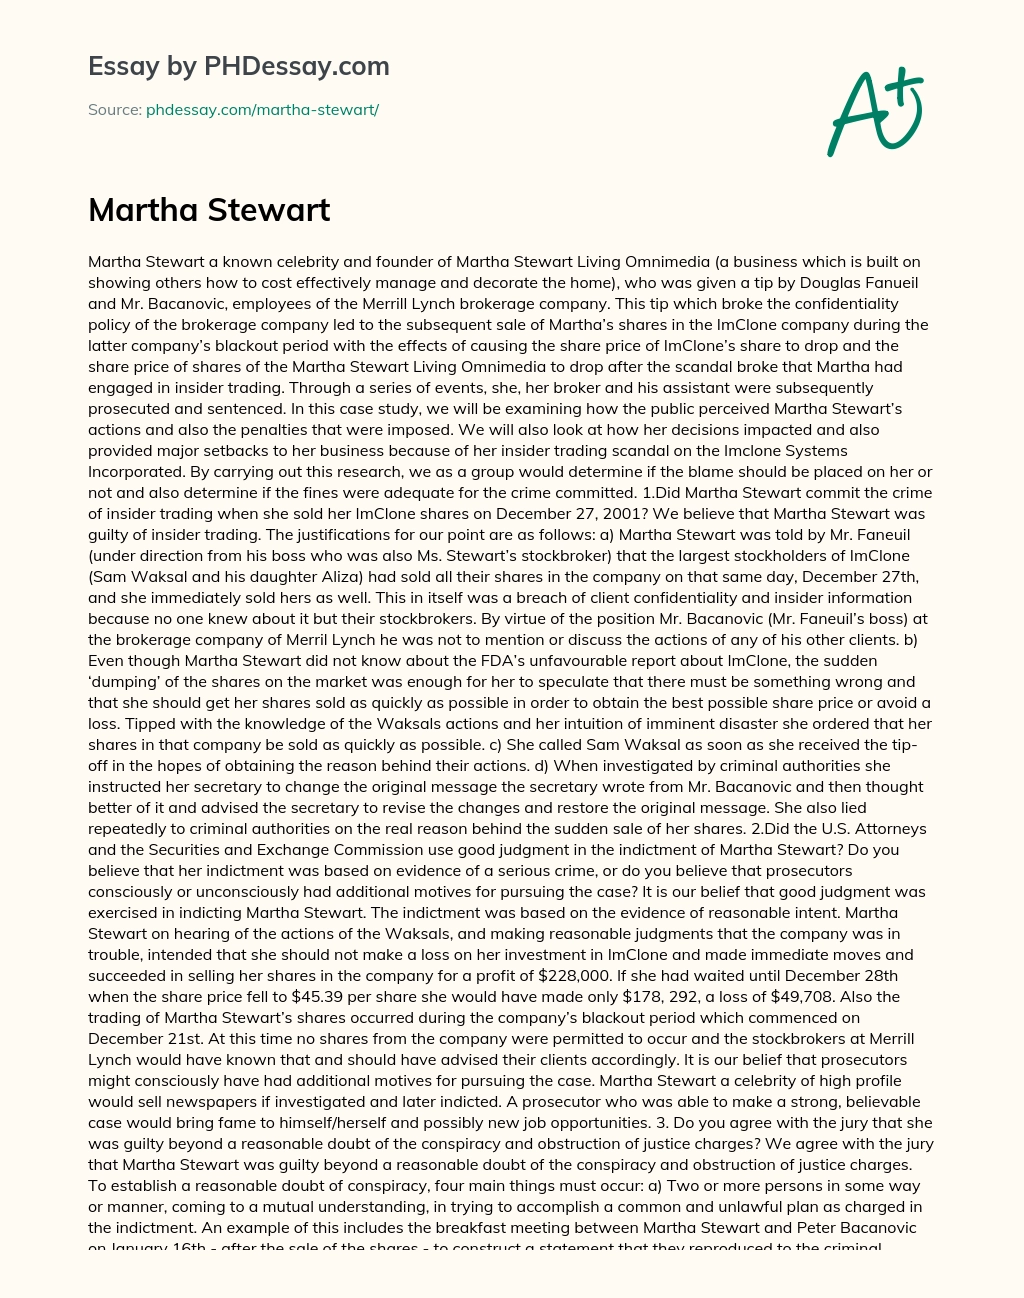 Martha Stewart essay